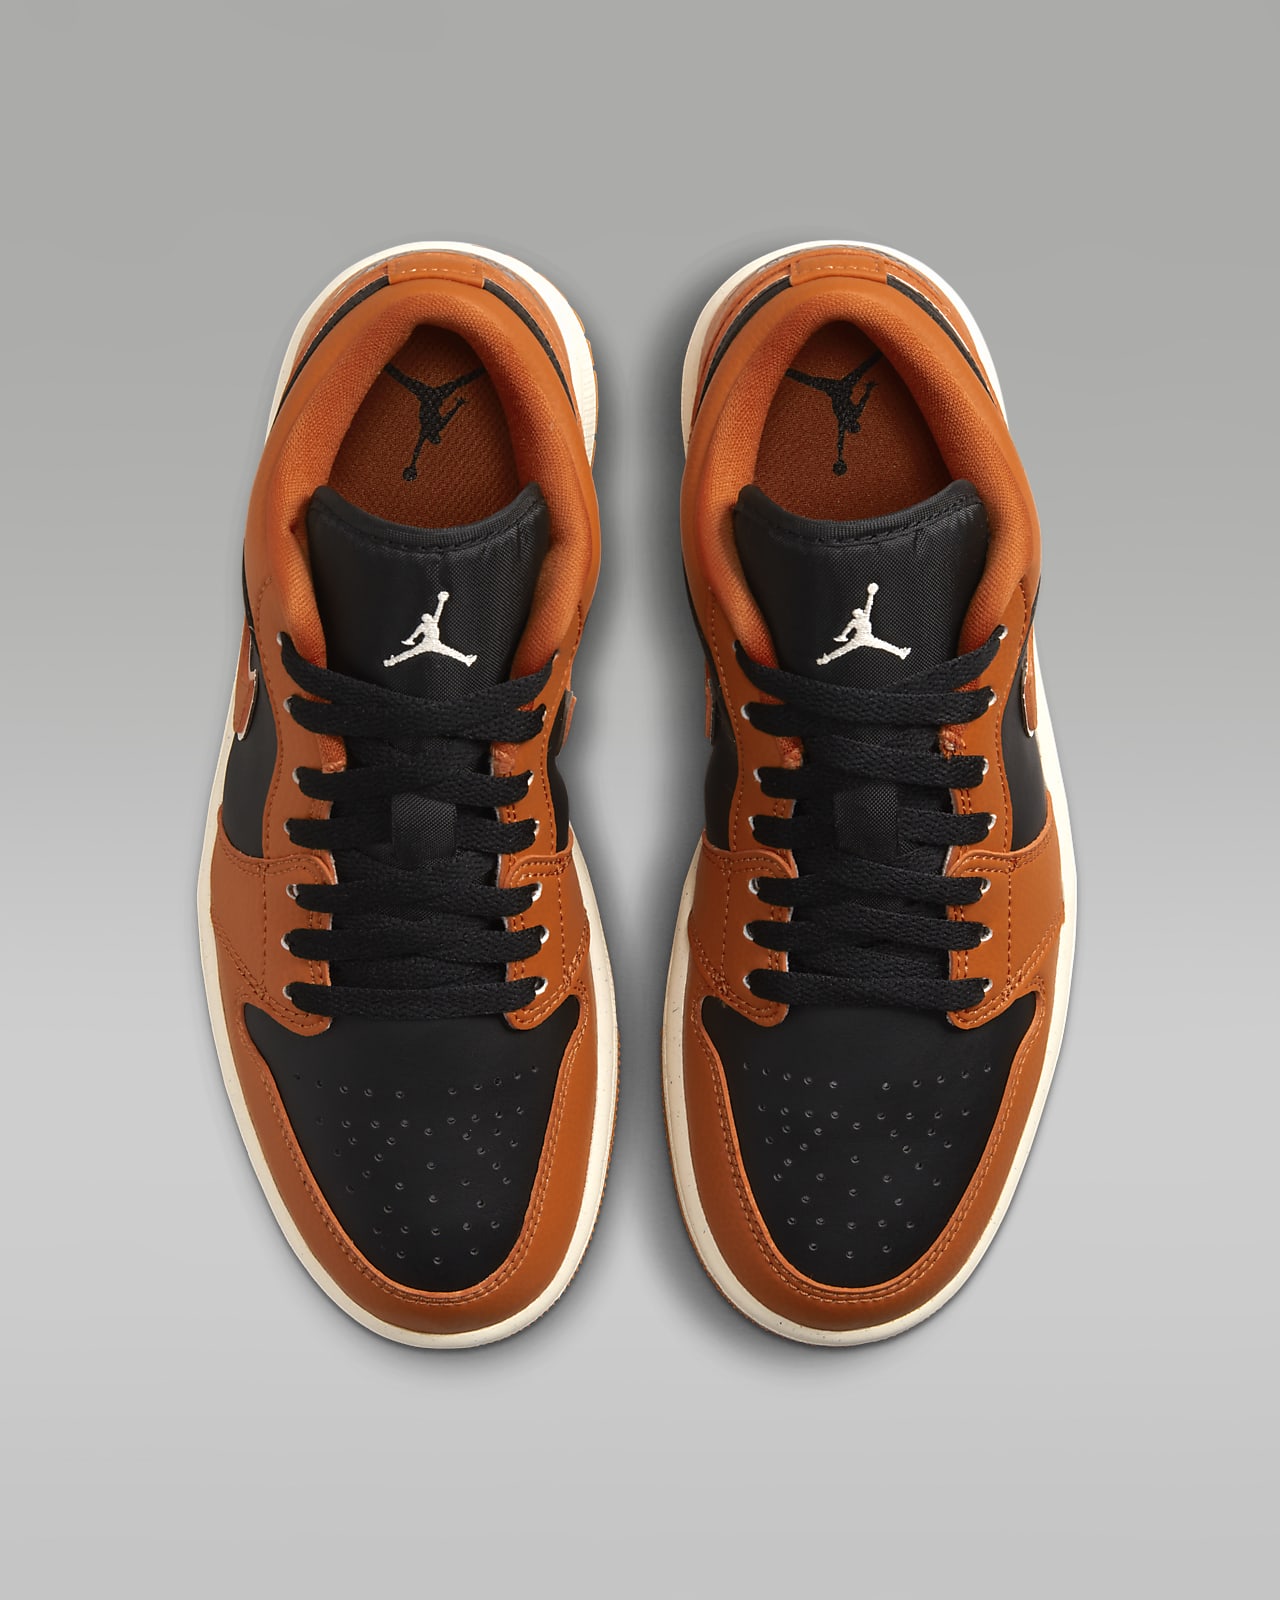 Air Jordan 1 Low SE Women's Shoes.